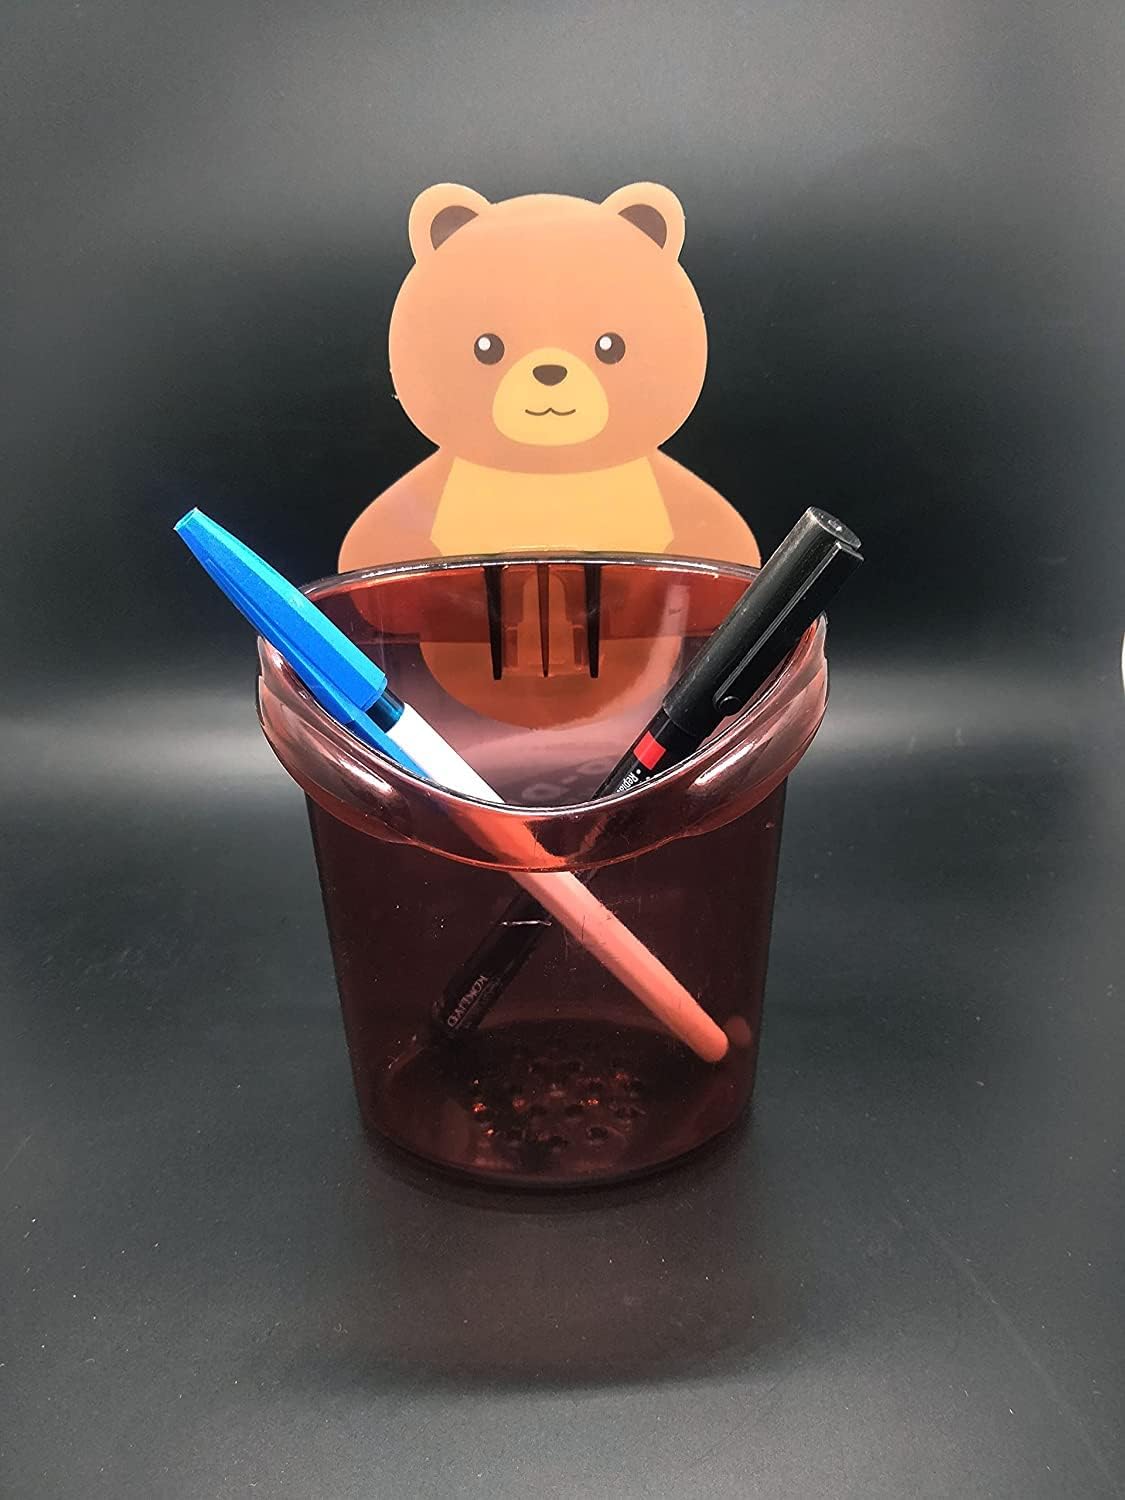 Self Adhesive Plastic Wall Mounted Multipurpose Teddy Bear Toothbrush Holder Cup